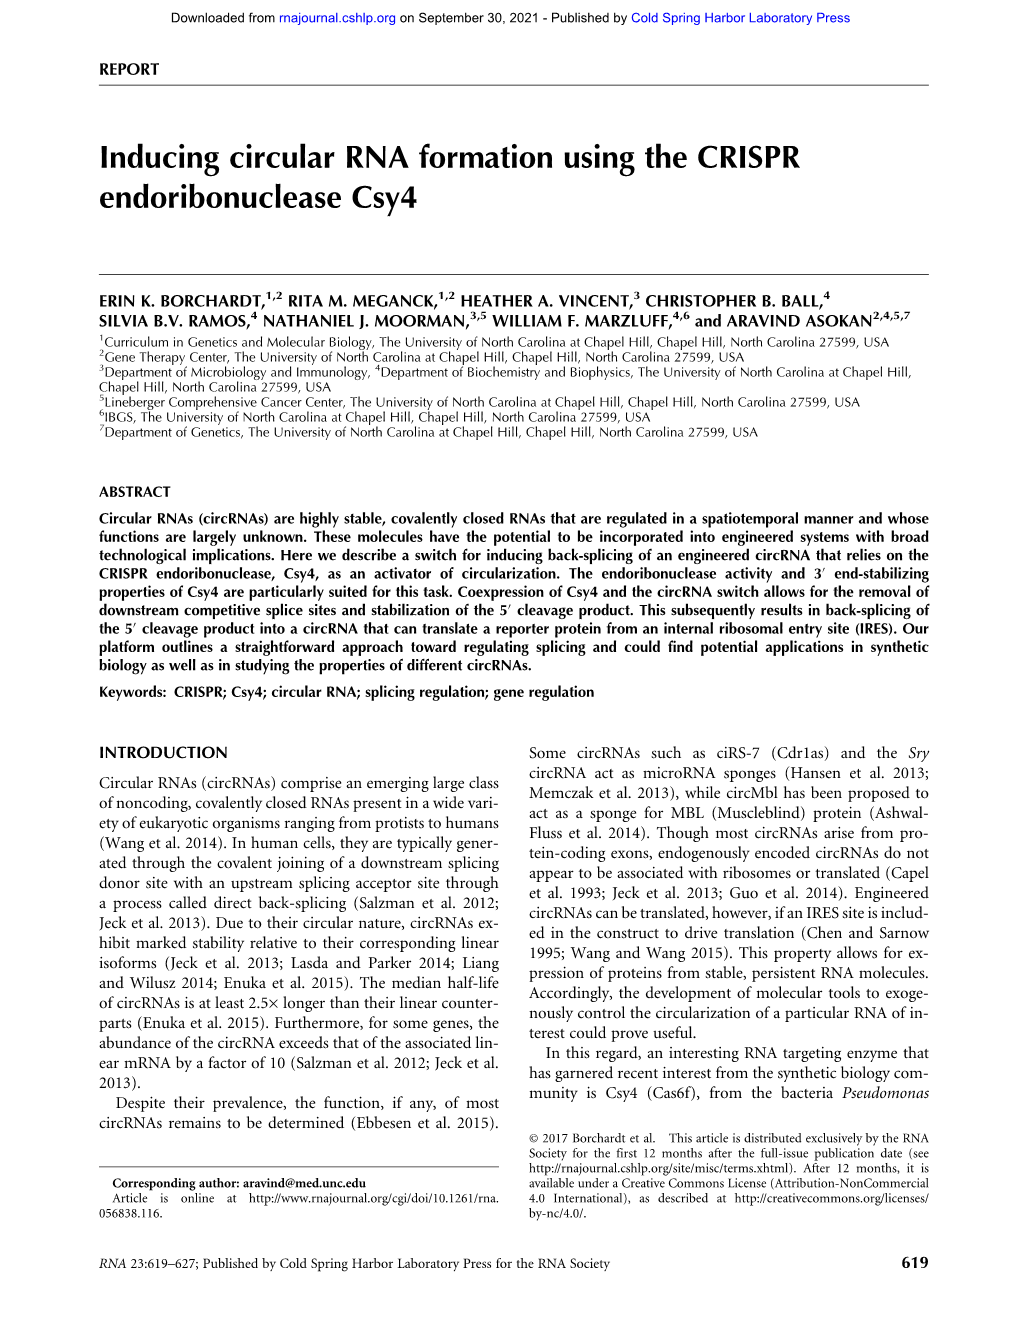 Inducing Circular RNA Formation Using the CRISPR Endoribonuclease Csy4